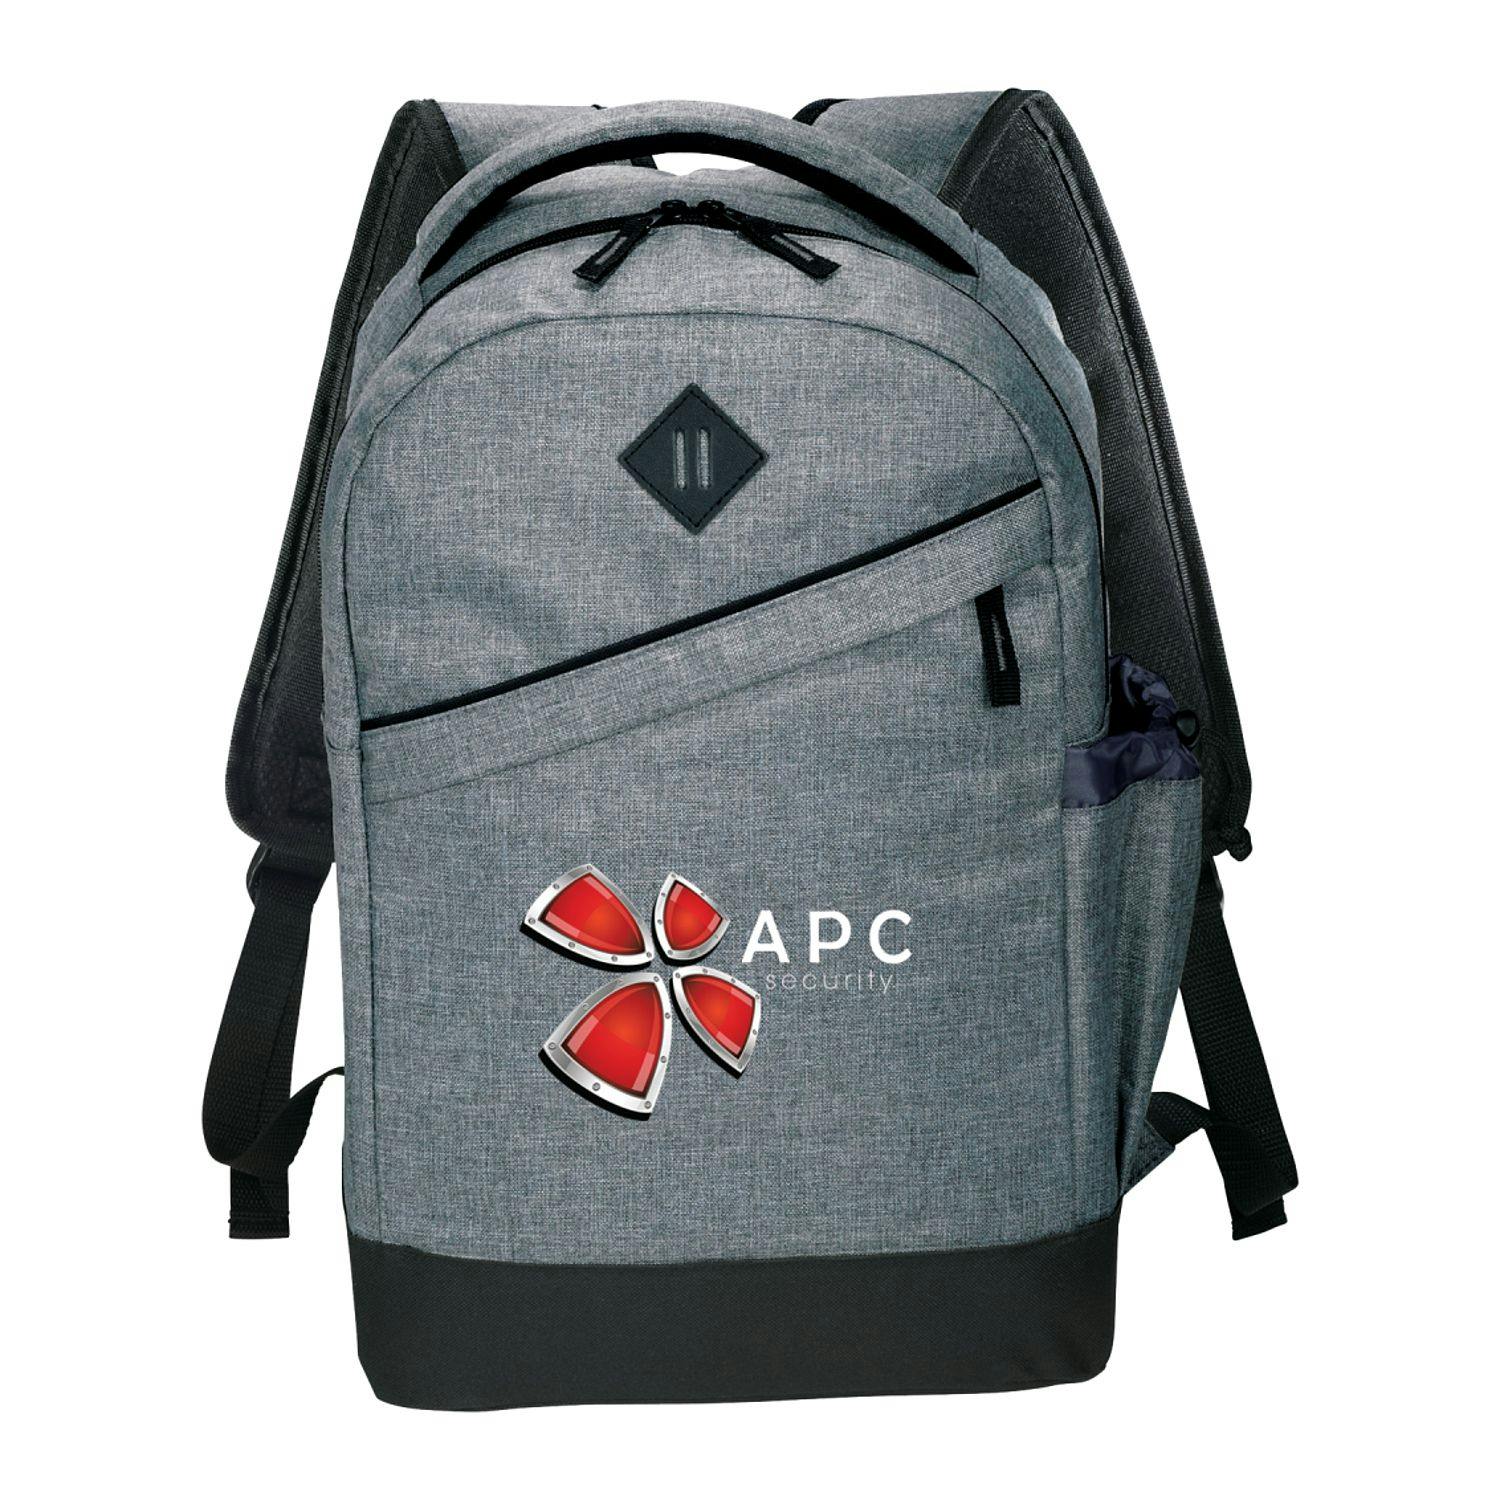 Graphite Slim 15" Computer Backpack - additional Image 4